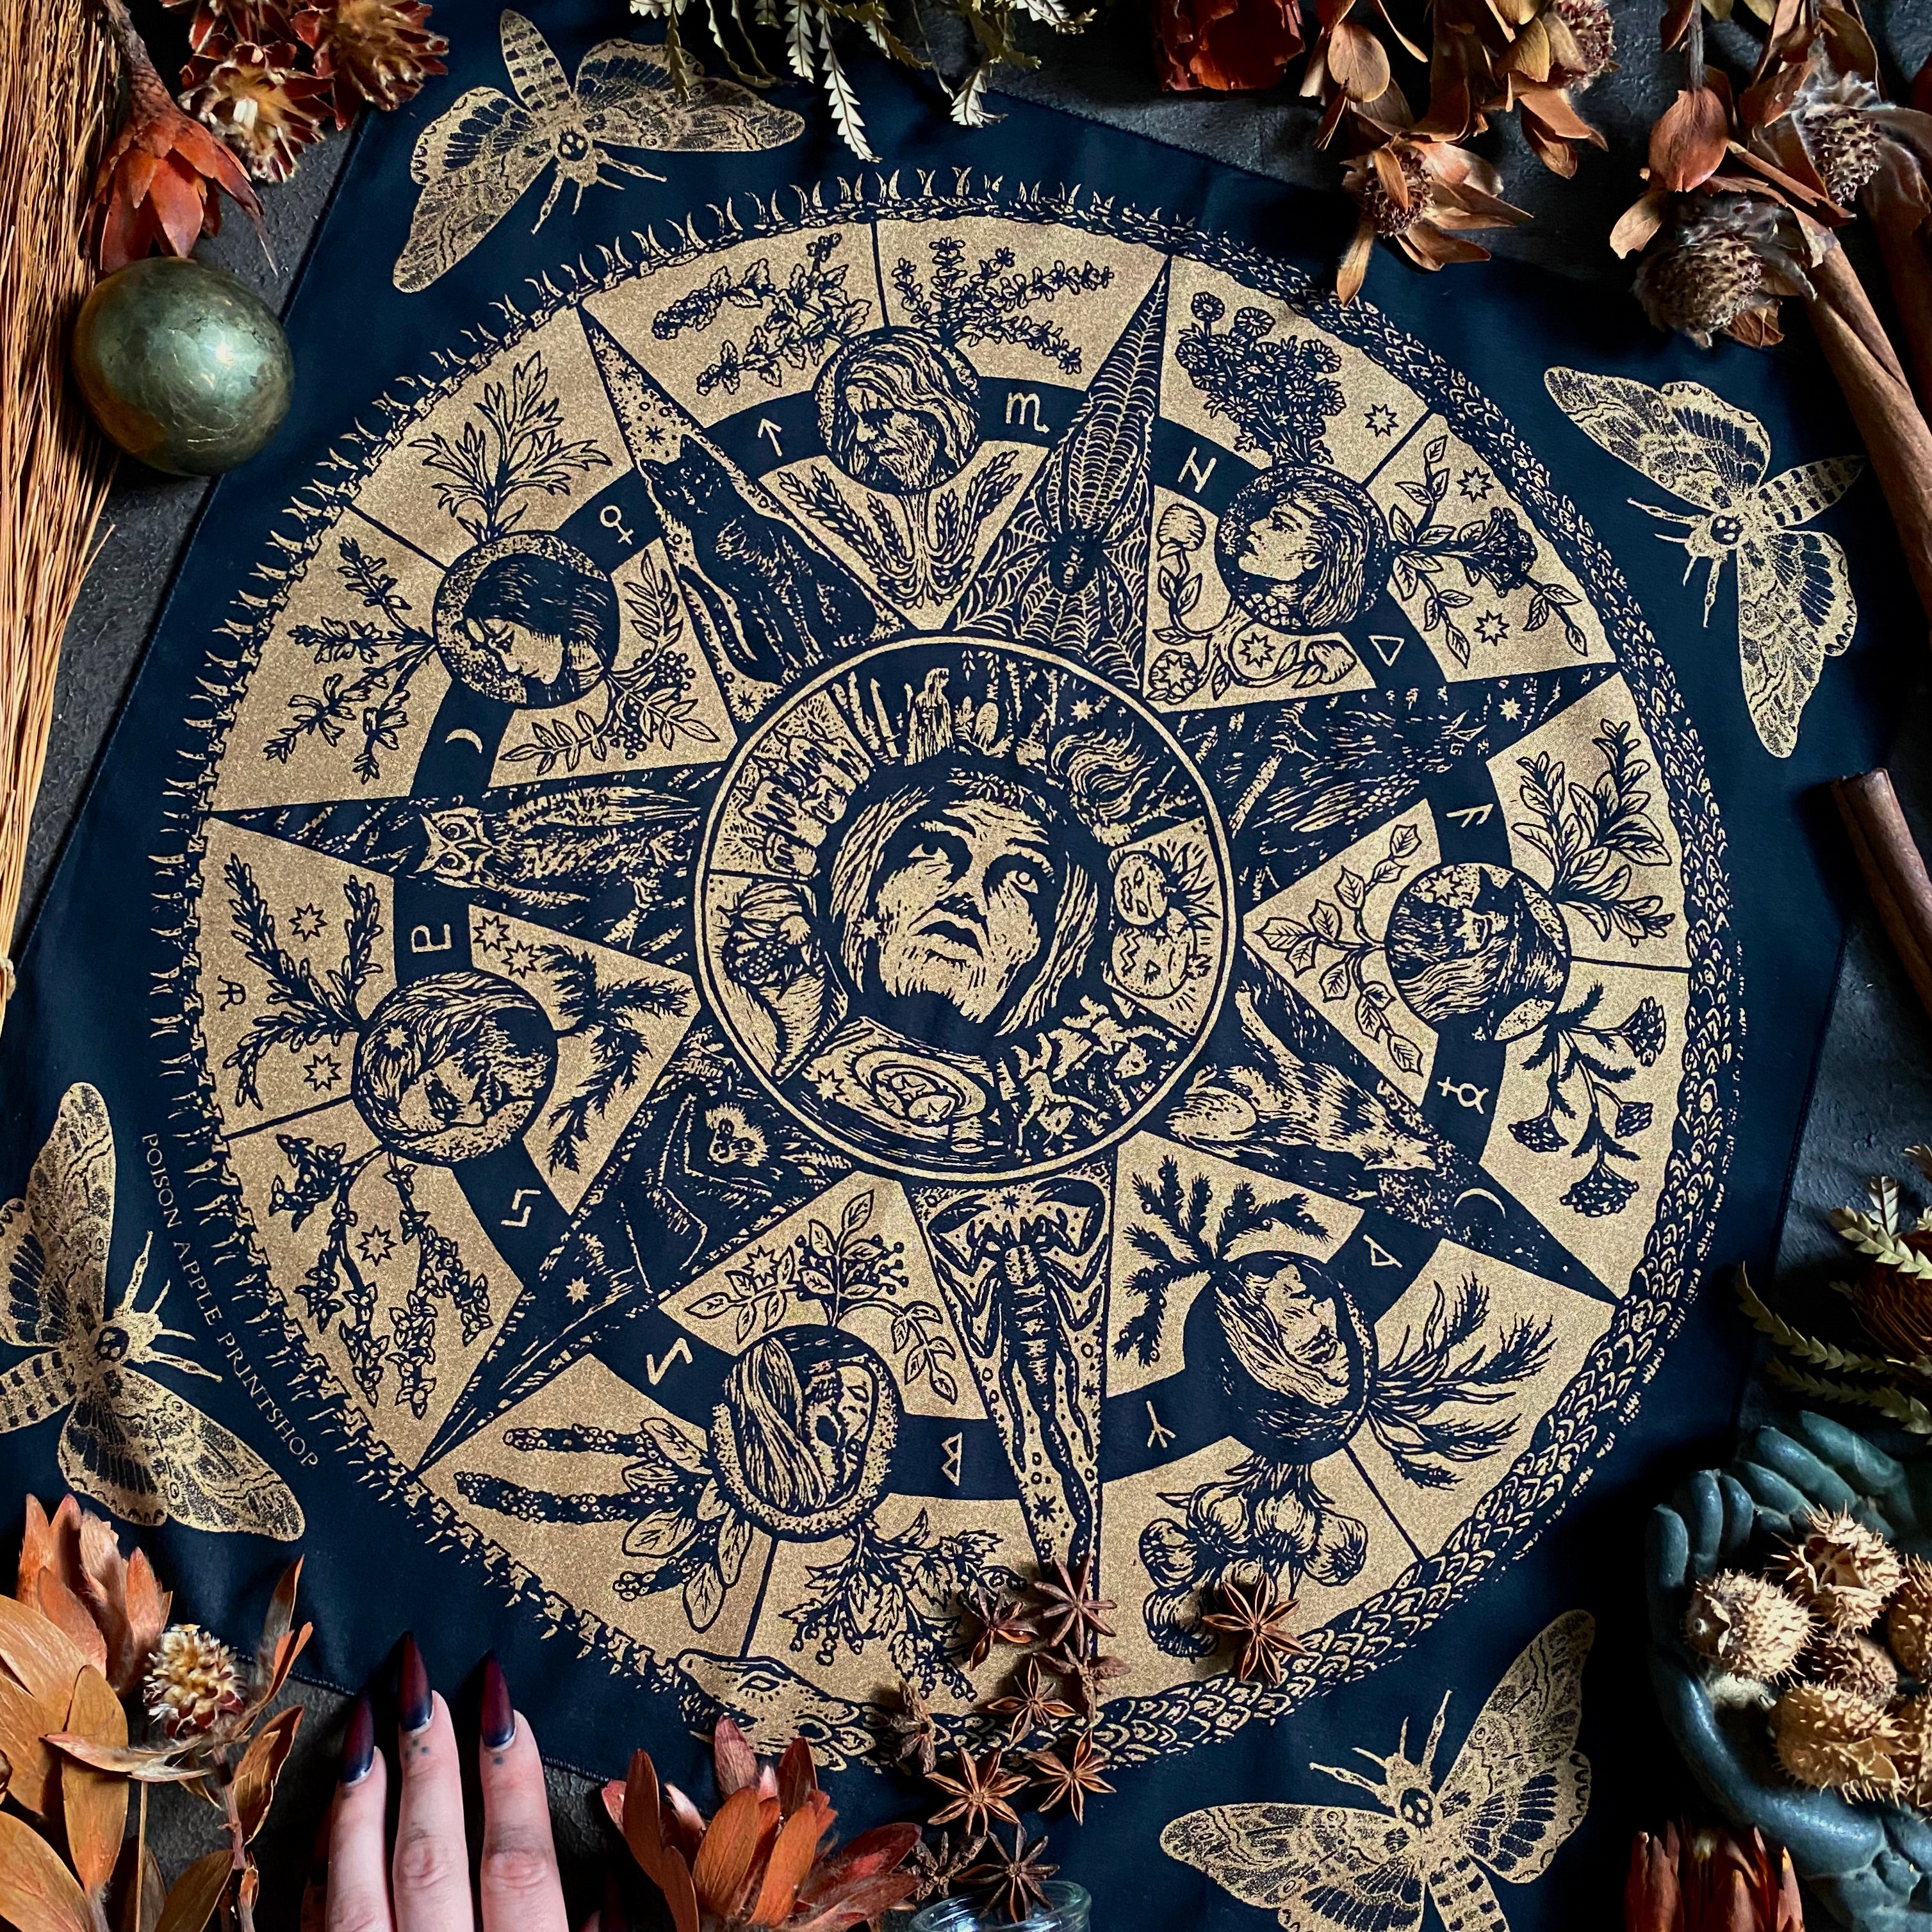 Wheel of Samhain bandana in Candle Glow Copper